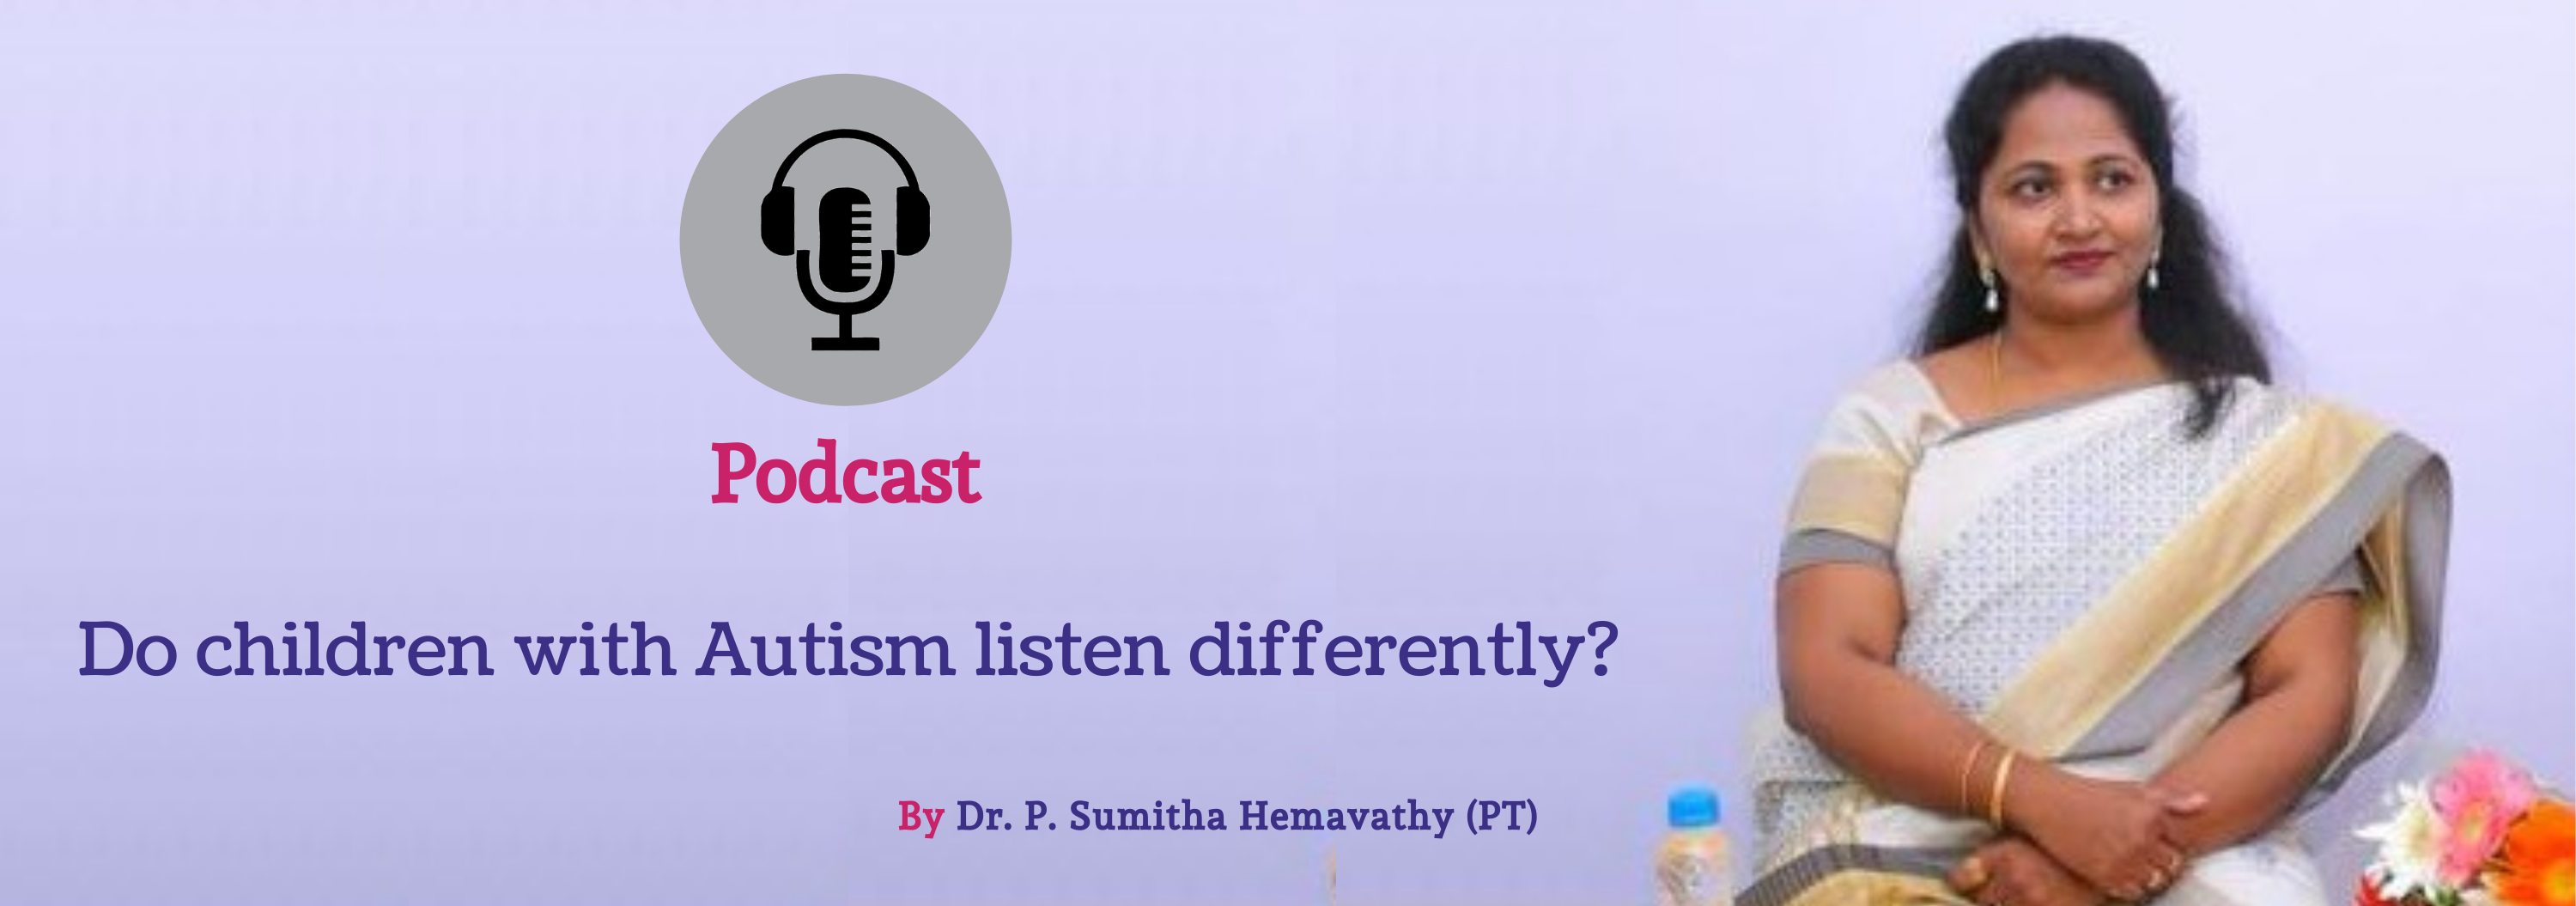 Podcast New Theme - Dr. P. Sumitha Hemavathy (PT) (1)